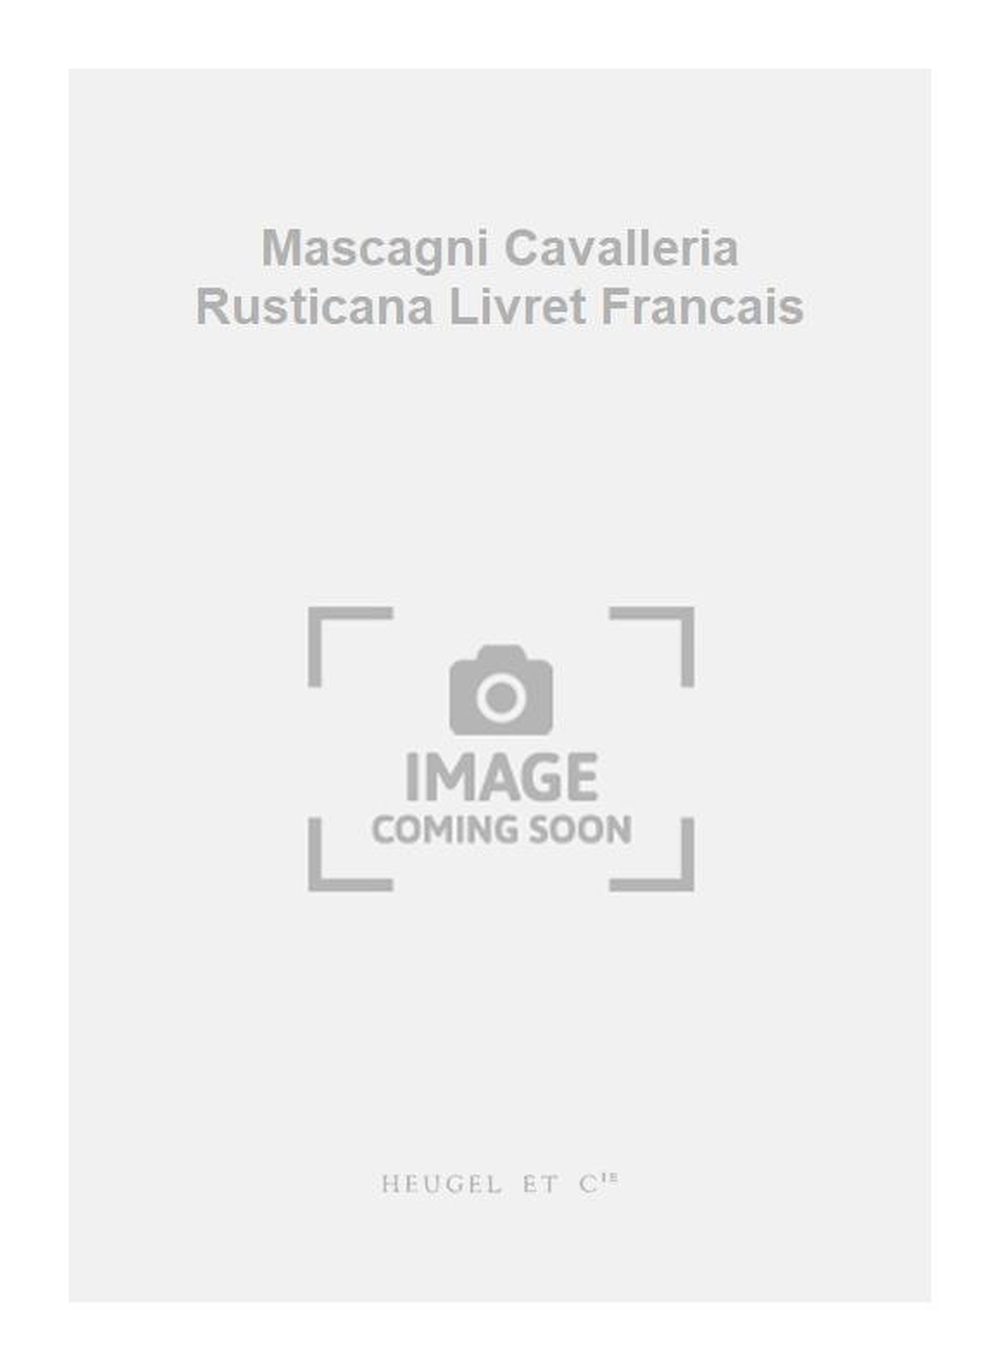 Pietro Mascagni: Mascagni Cavalleria Rusticana Livret Francais